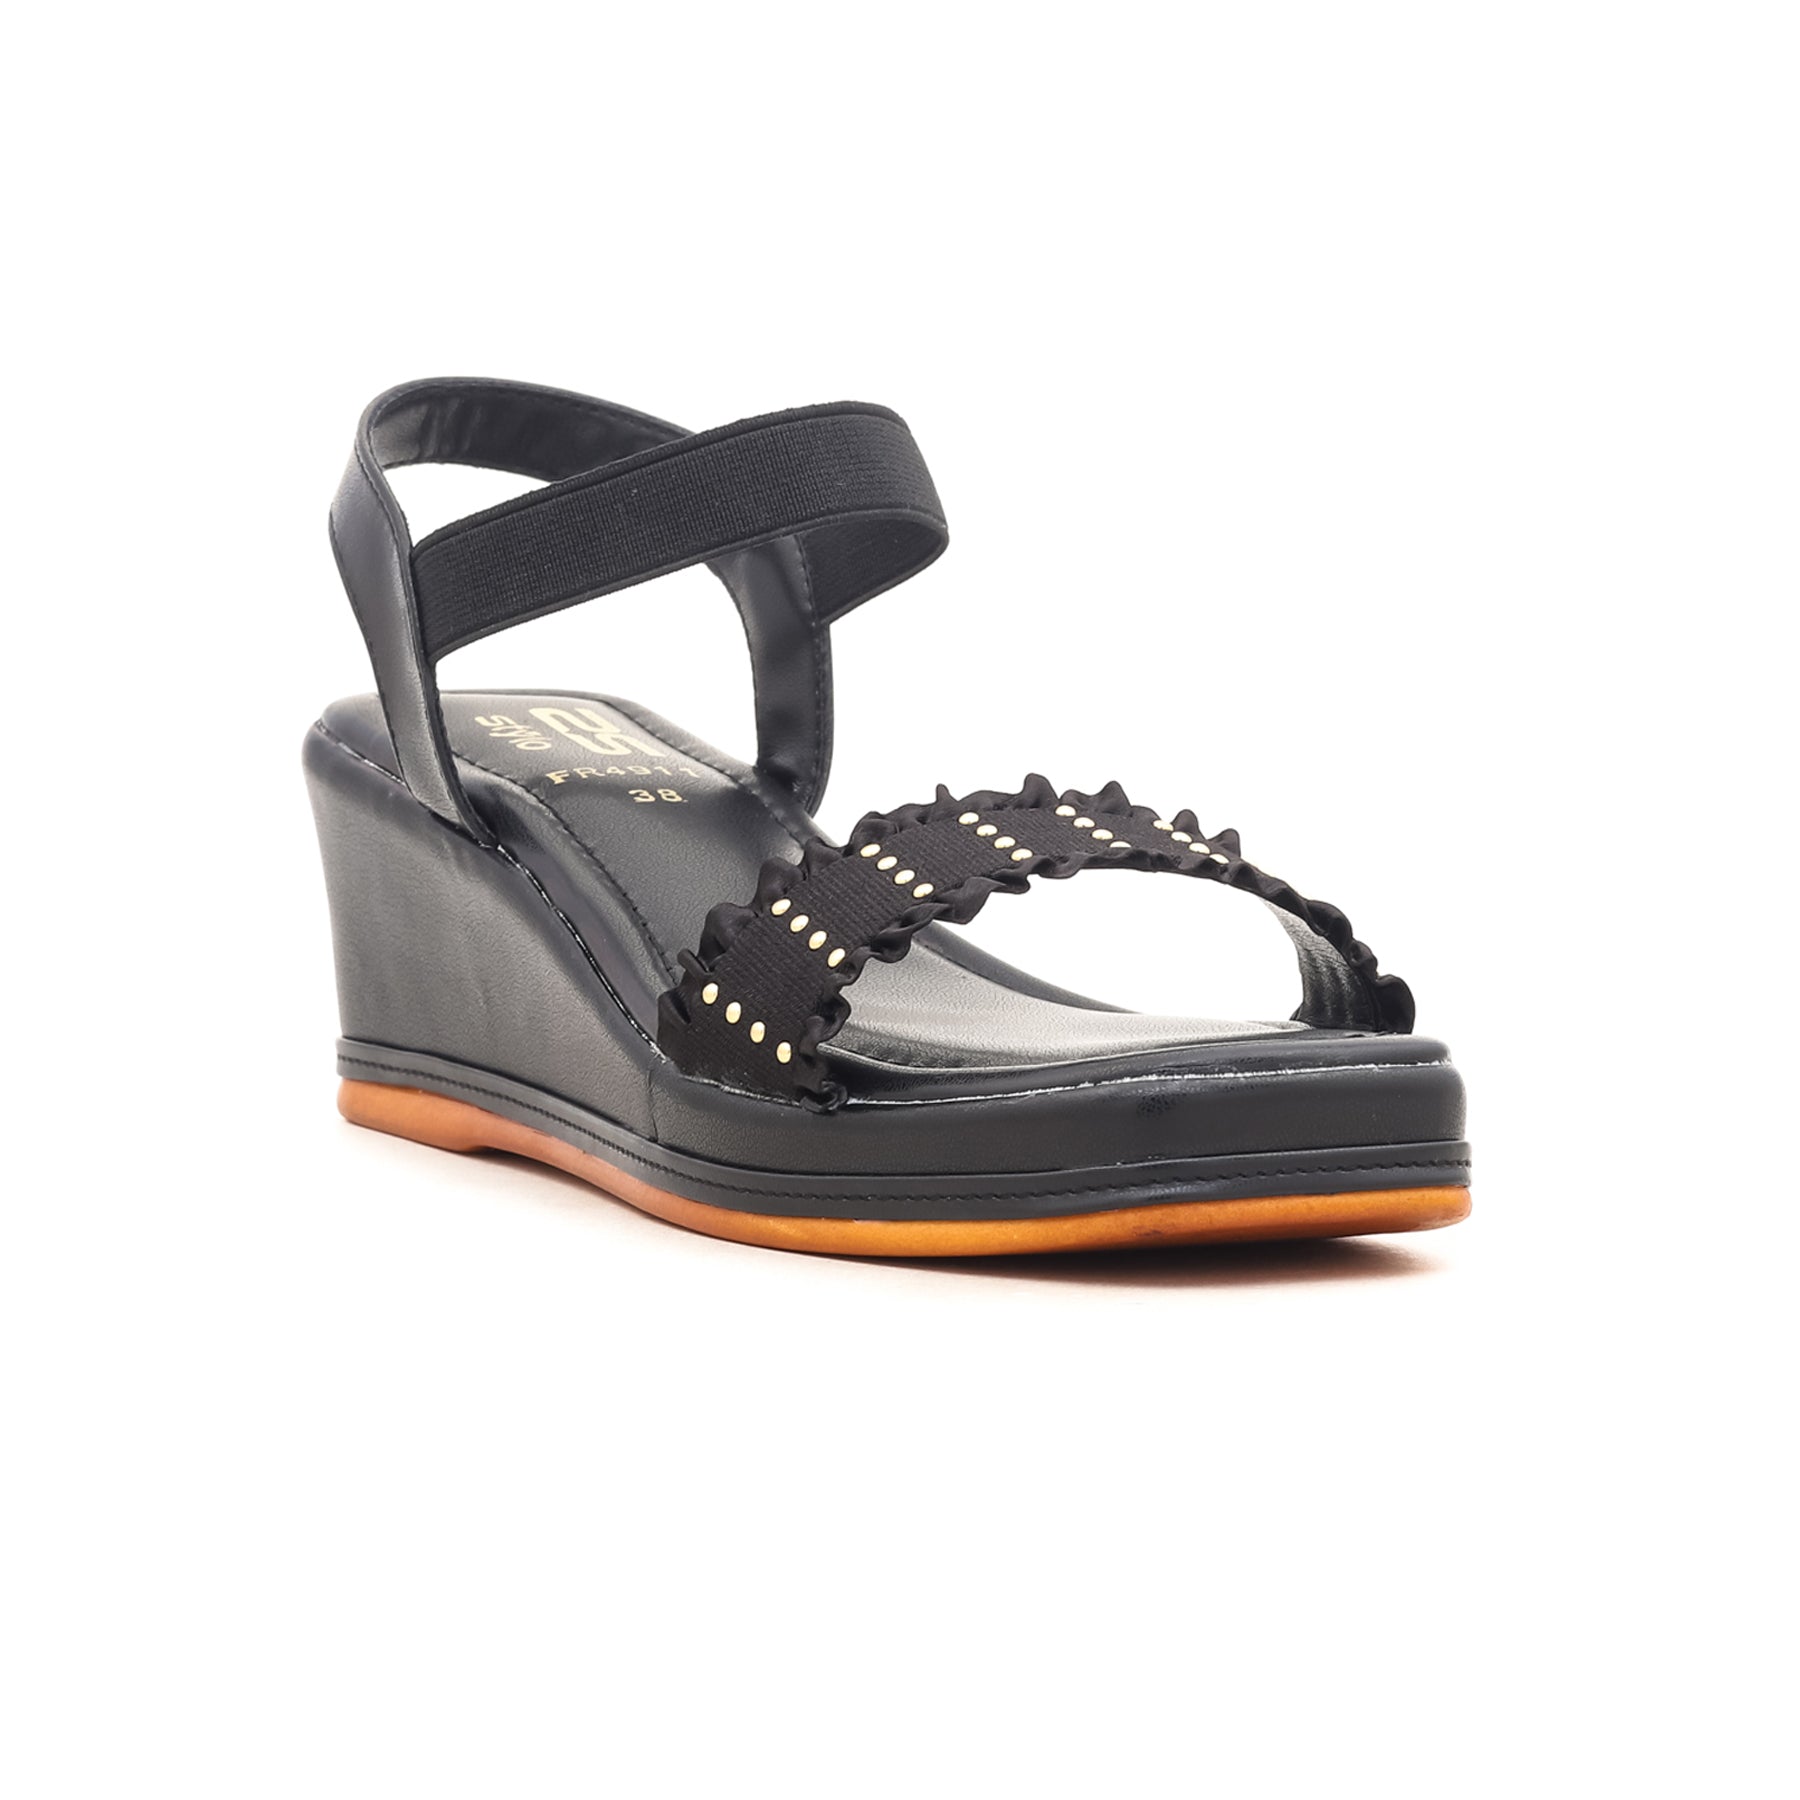 Black Formal Sandal FR4911